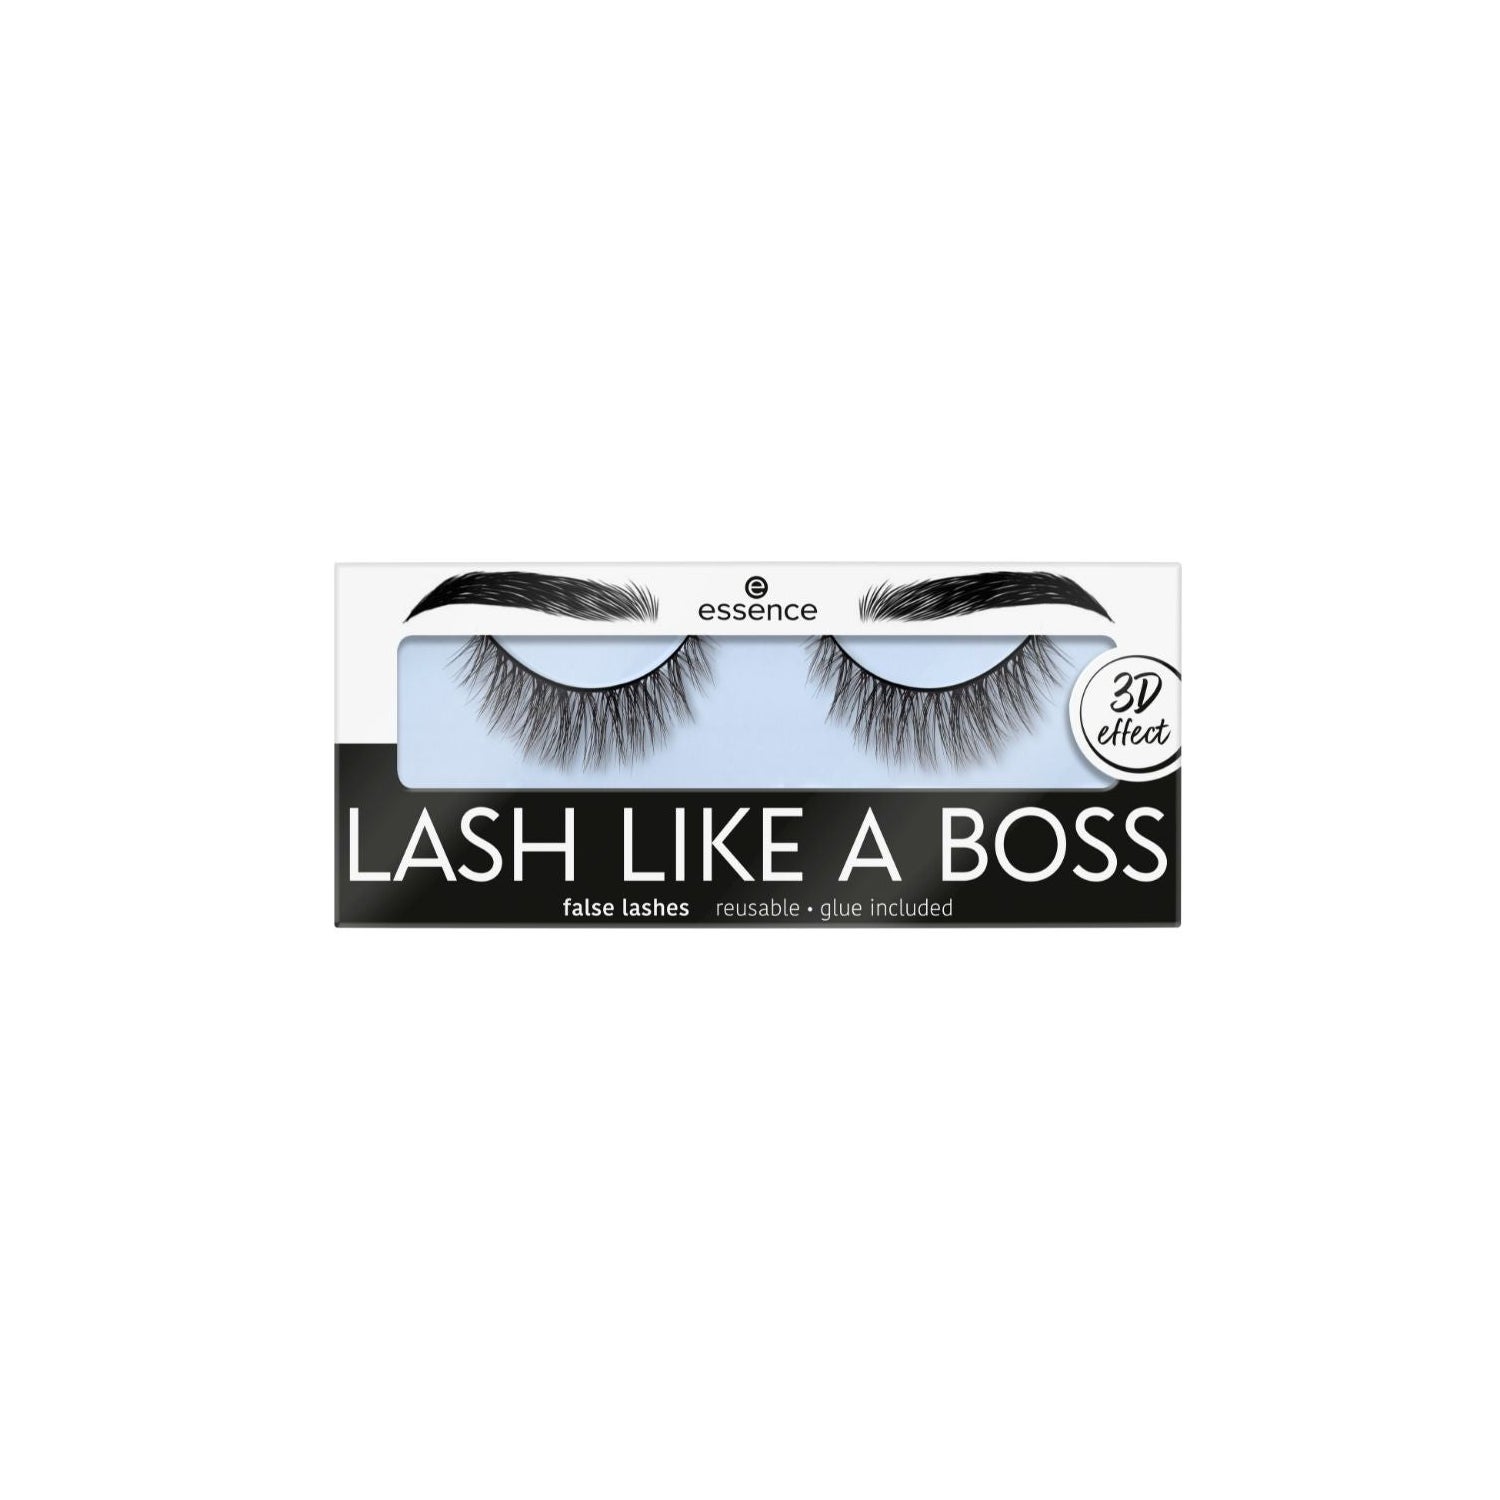 Par Boss PromoFarma False | Irresistible Essence Lashes Like Lash A 1 06